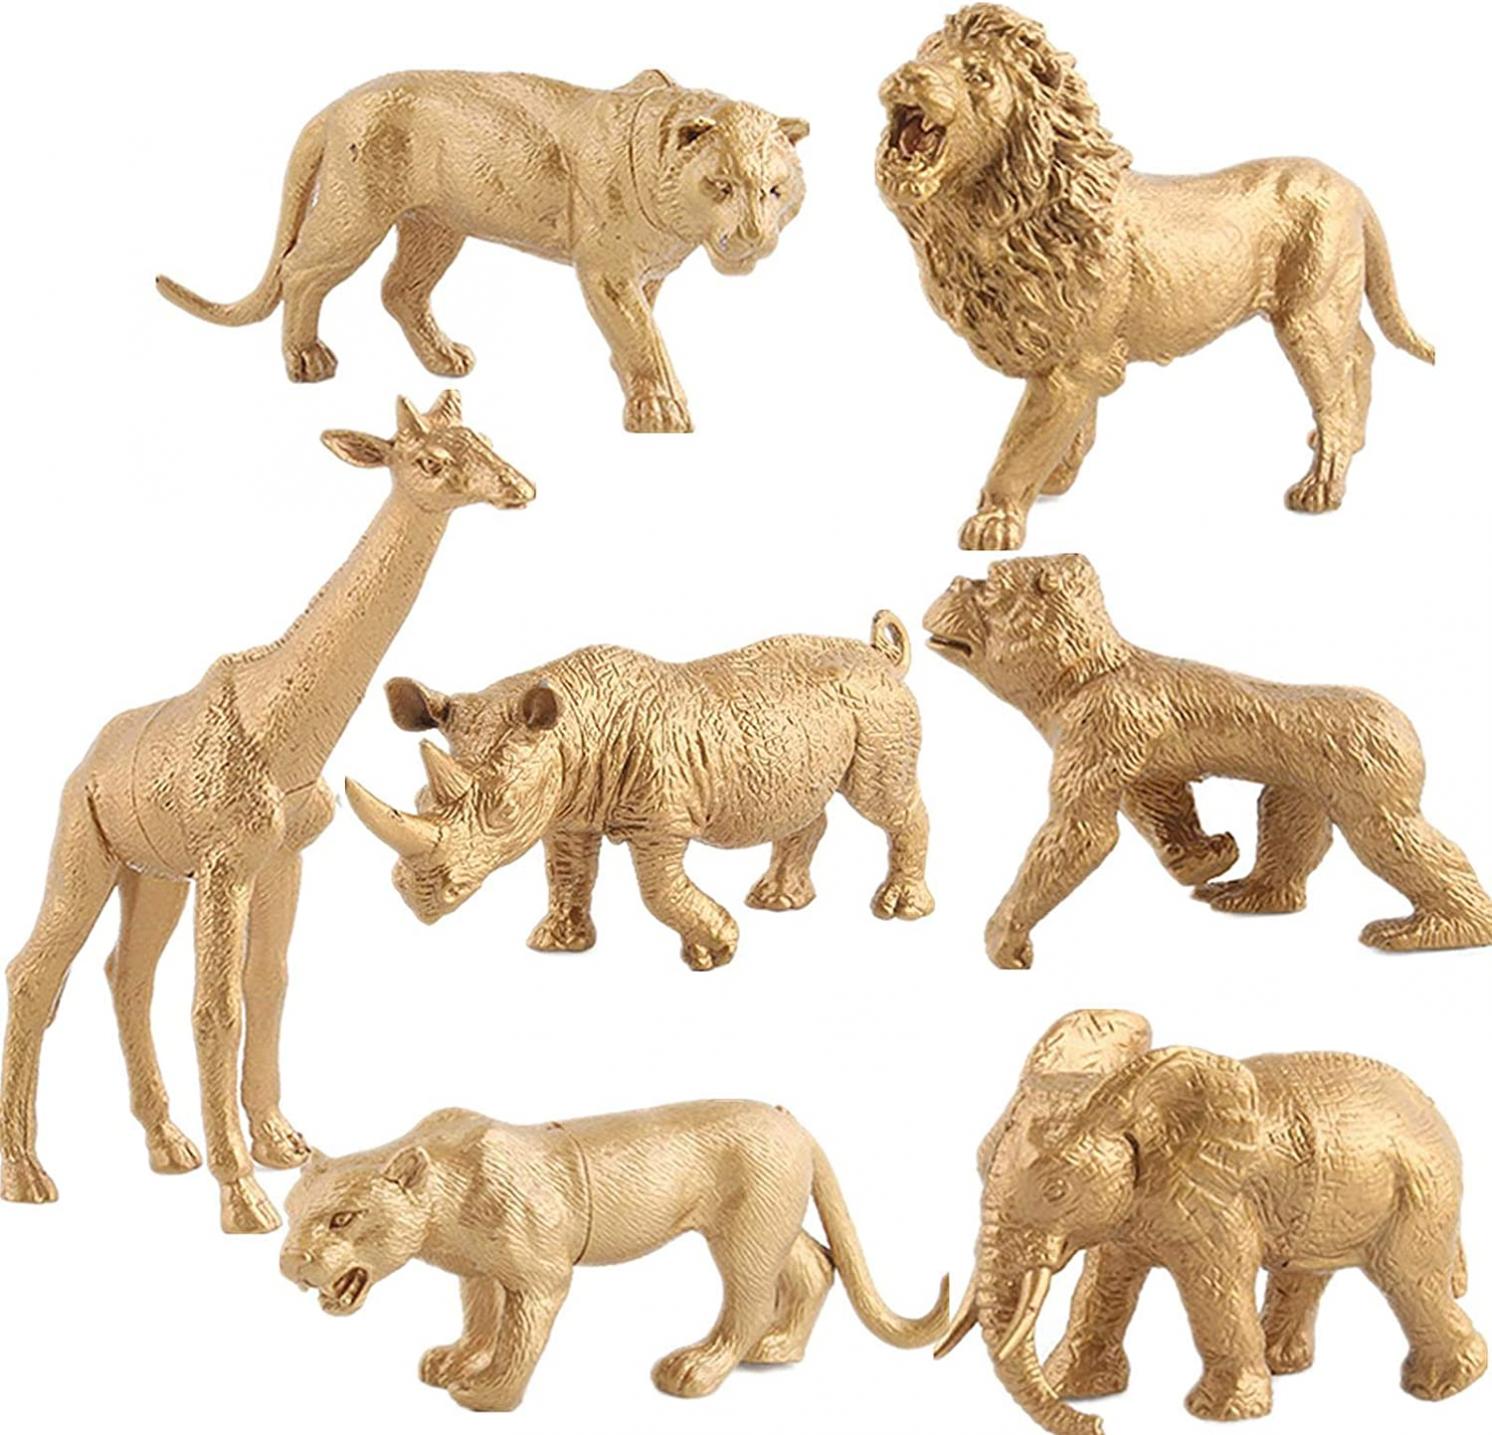 Safari Animals Figures, Wild Animals Figures Animals Toy for Kids, Toddlers